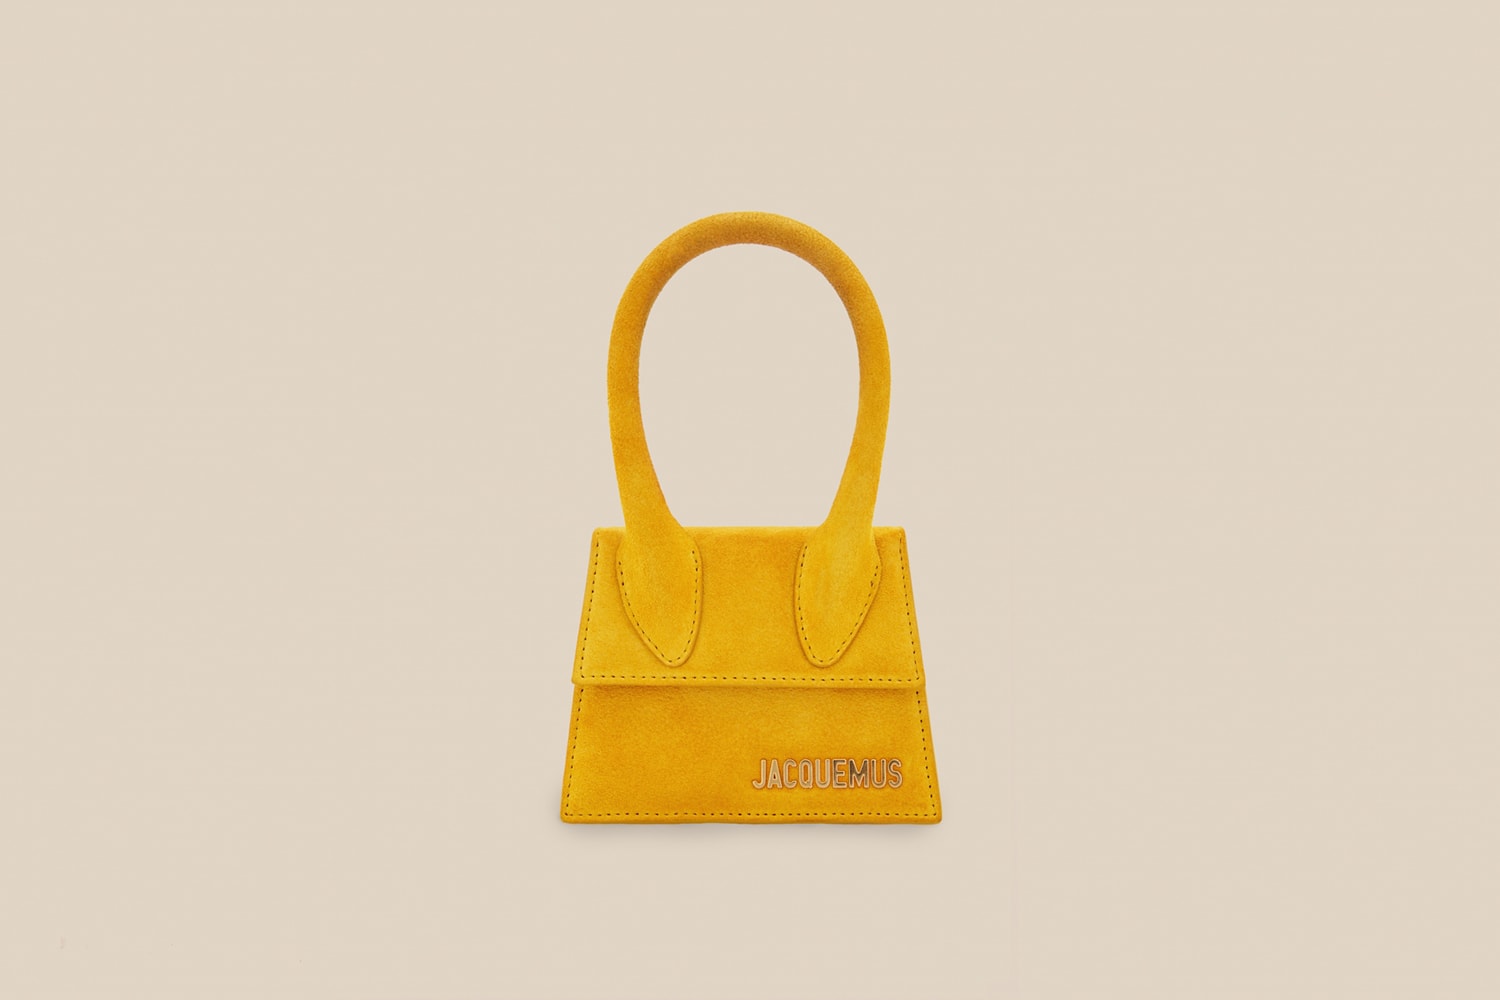 Jacquemus Le Sac Chiquito Mini Micro Bag Handbag Kendall Jenner Kim Kardashian Rihanna Yellow Suede Spring Summer 2018